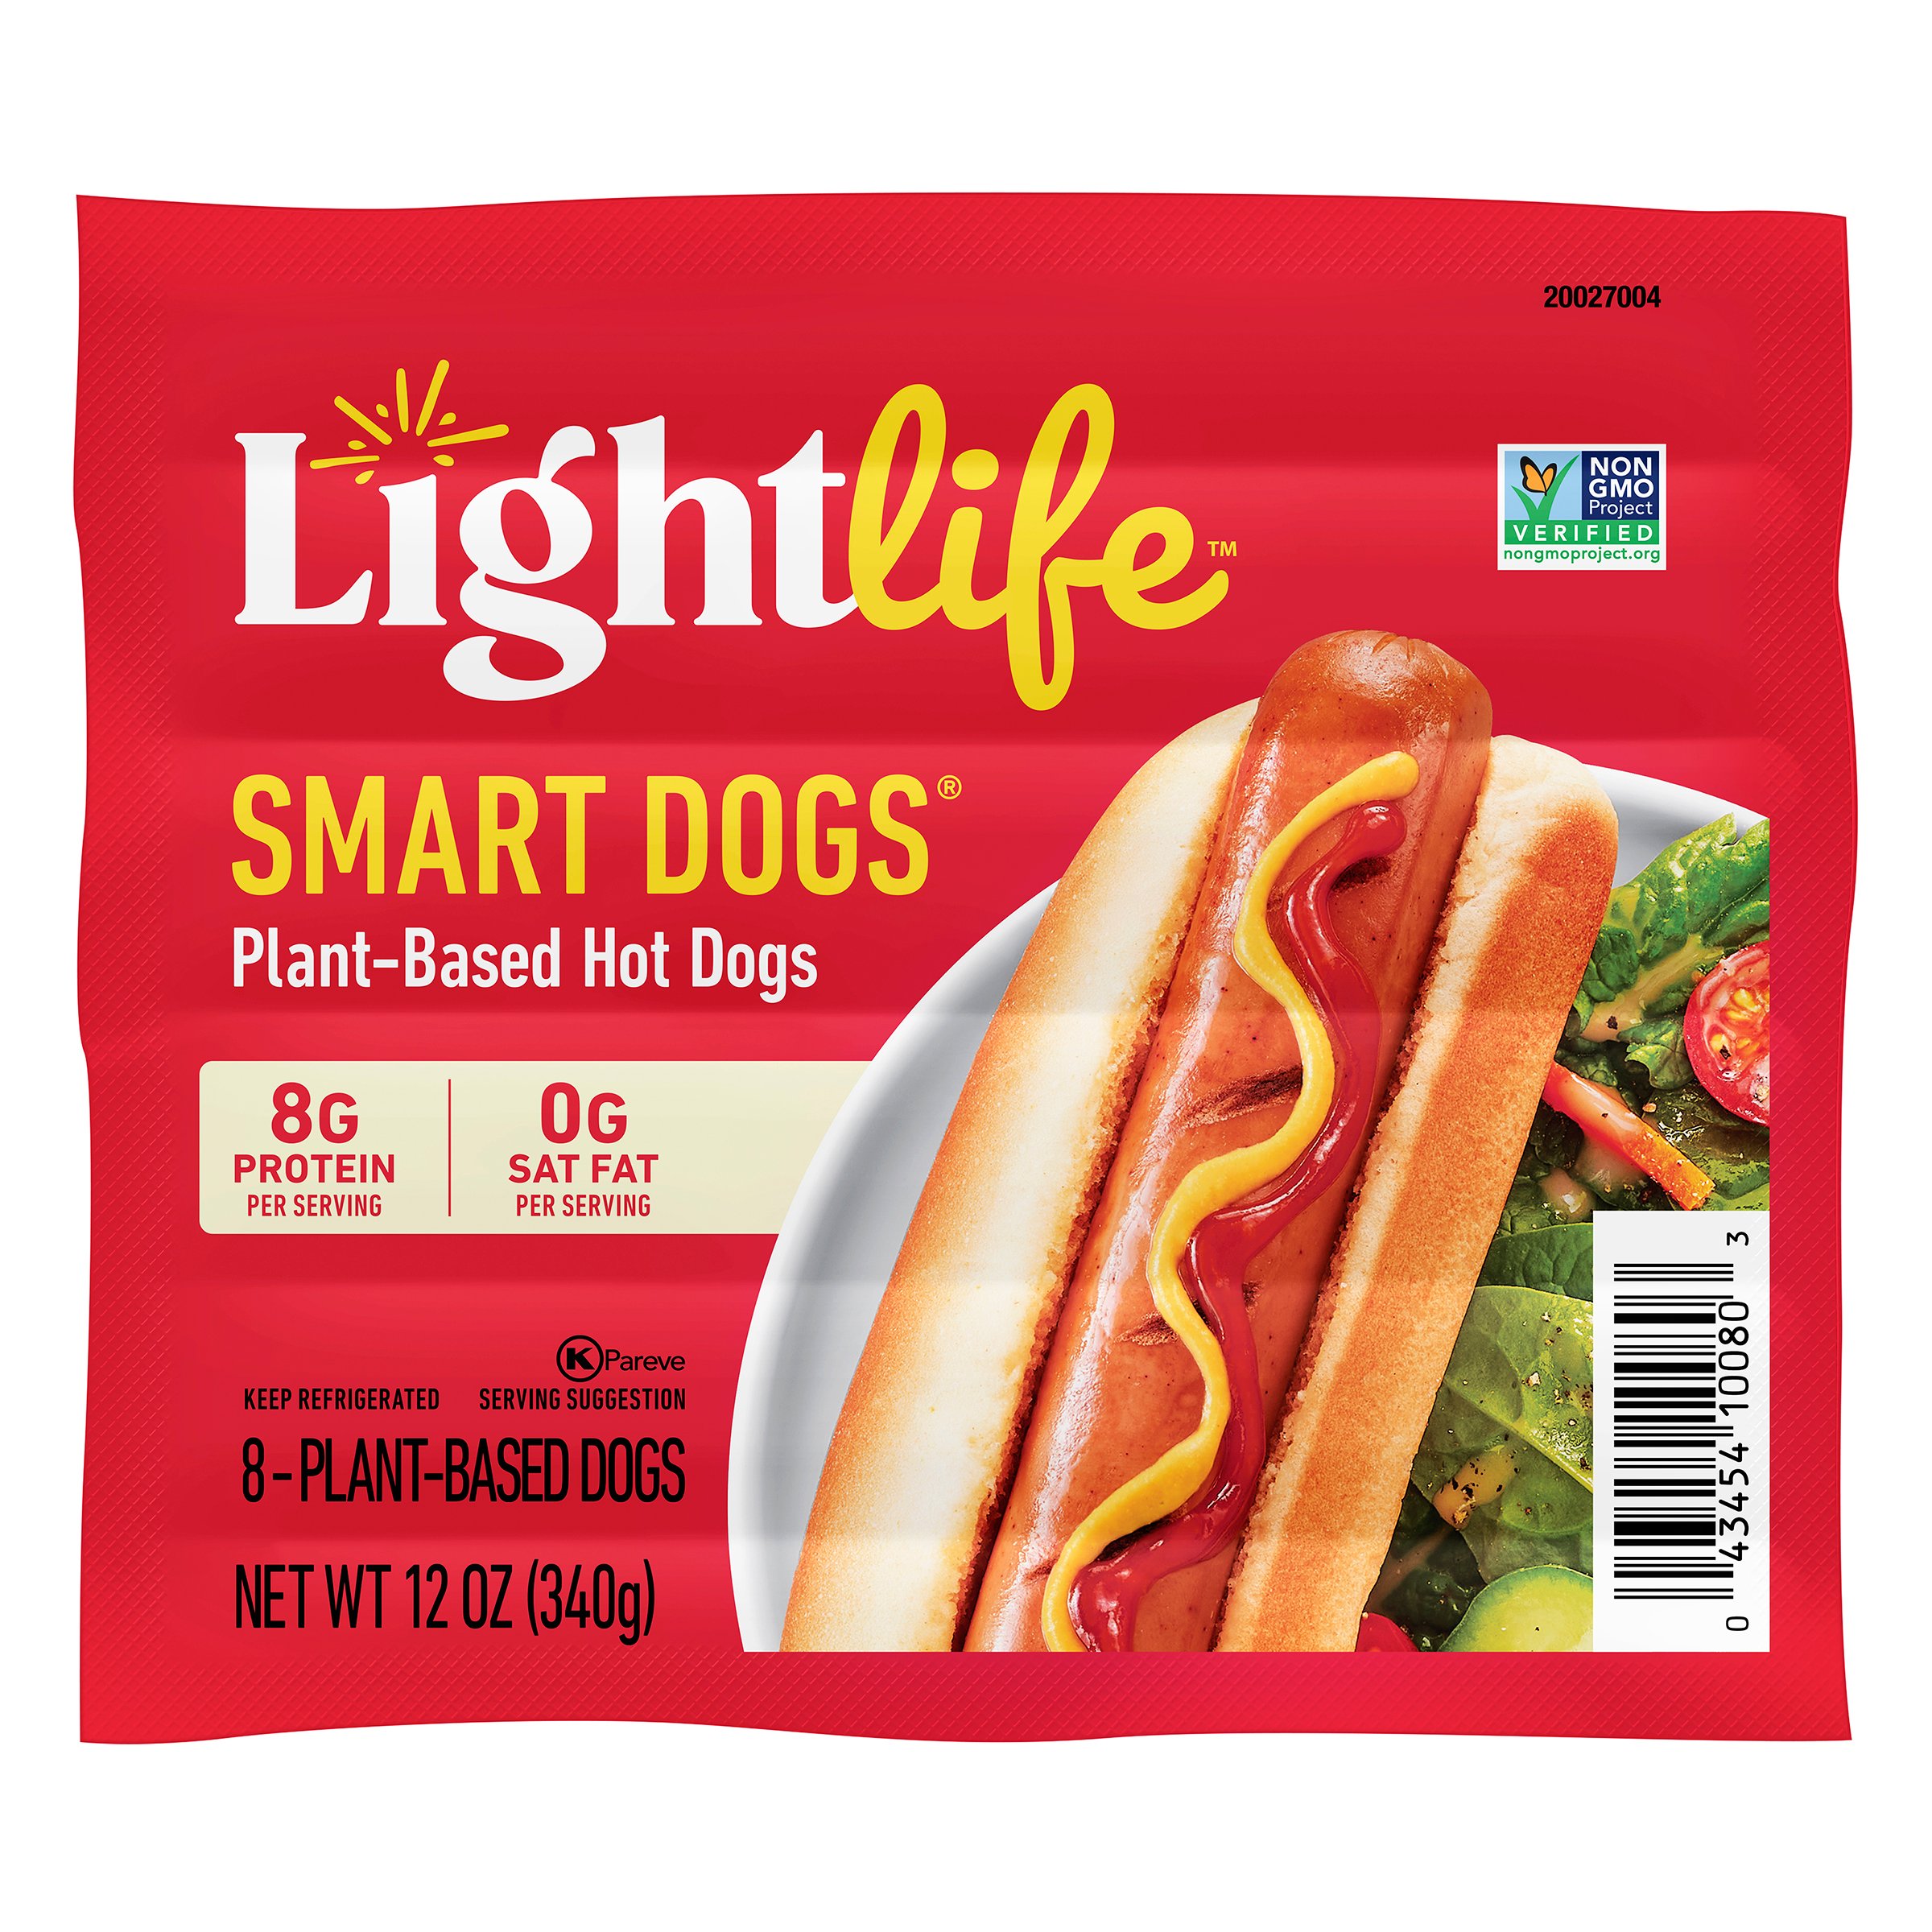 Lifelight Hot Dogs